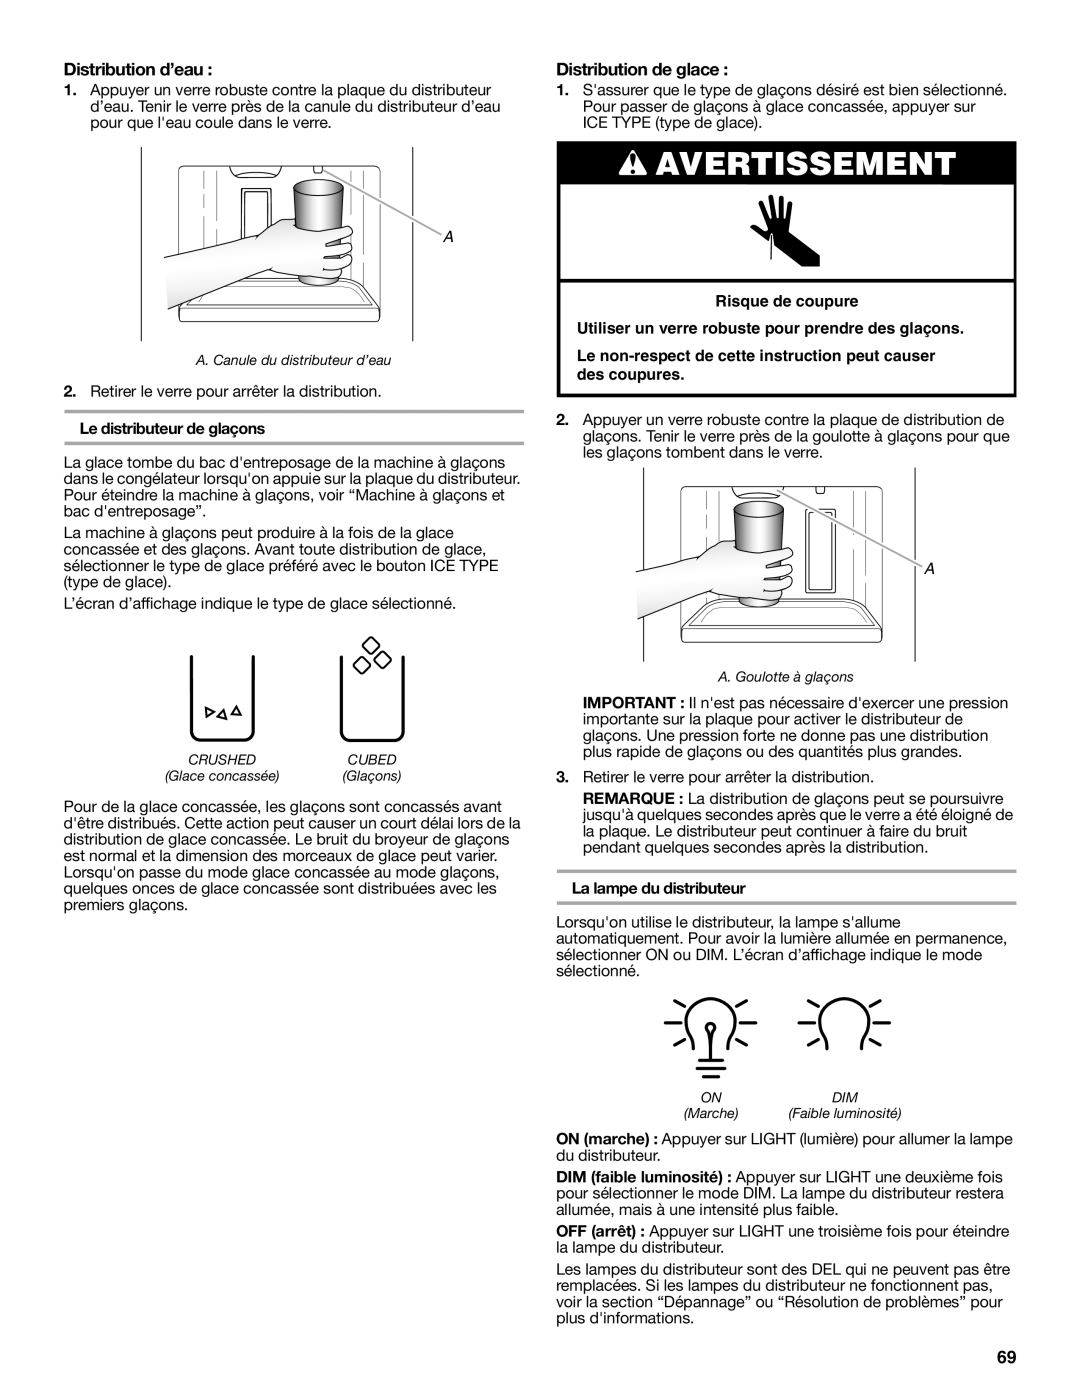 Whirlpool W10632883A installation instructions Distribution d’eau, Distribution de glace, Avertissement 